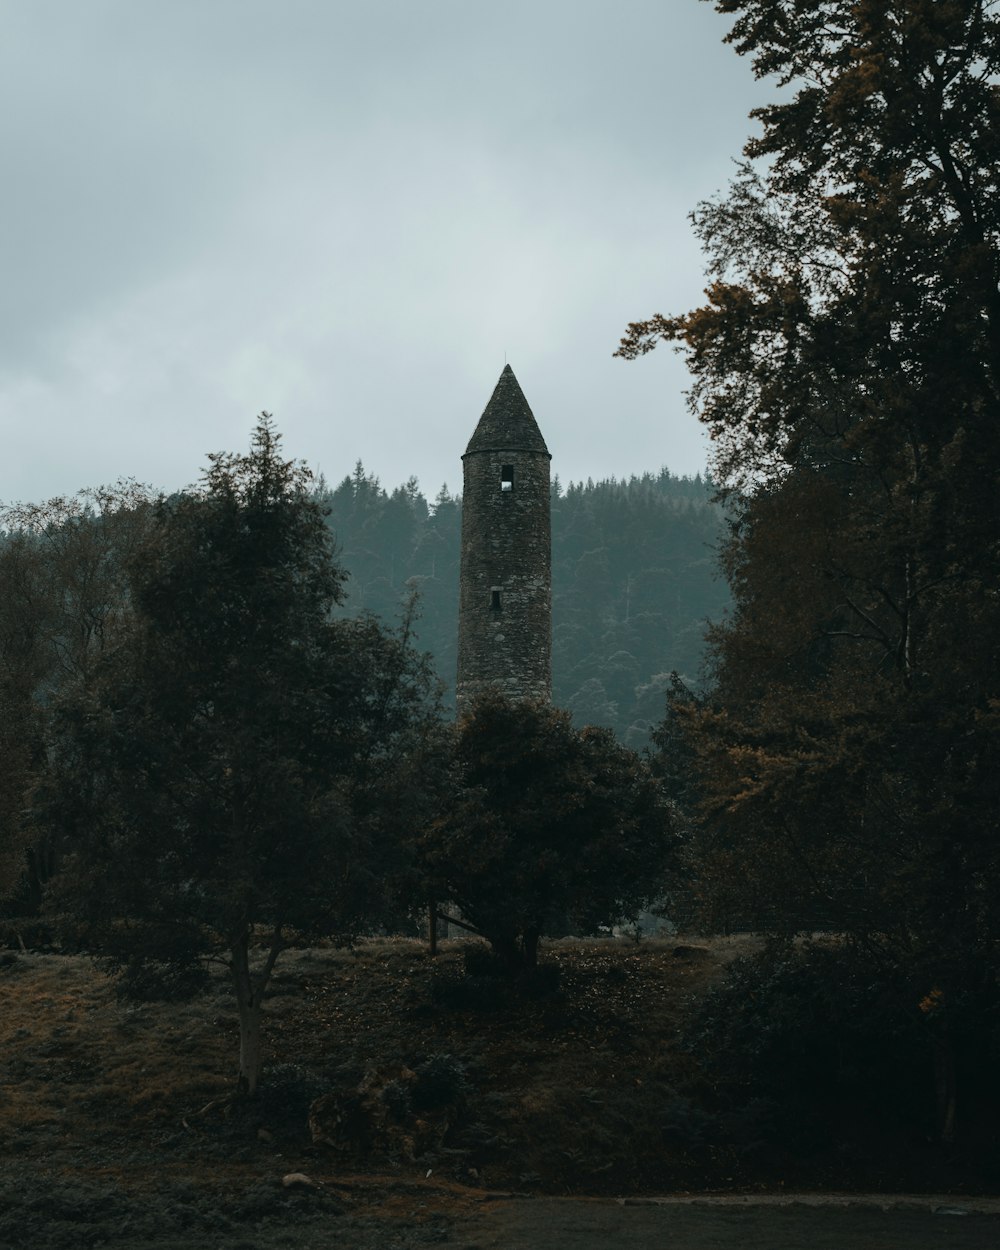 Una alta torre del reloj que se eleva sobre un bosque